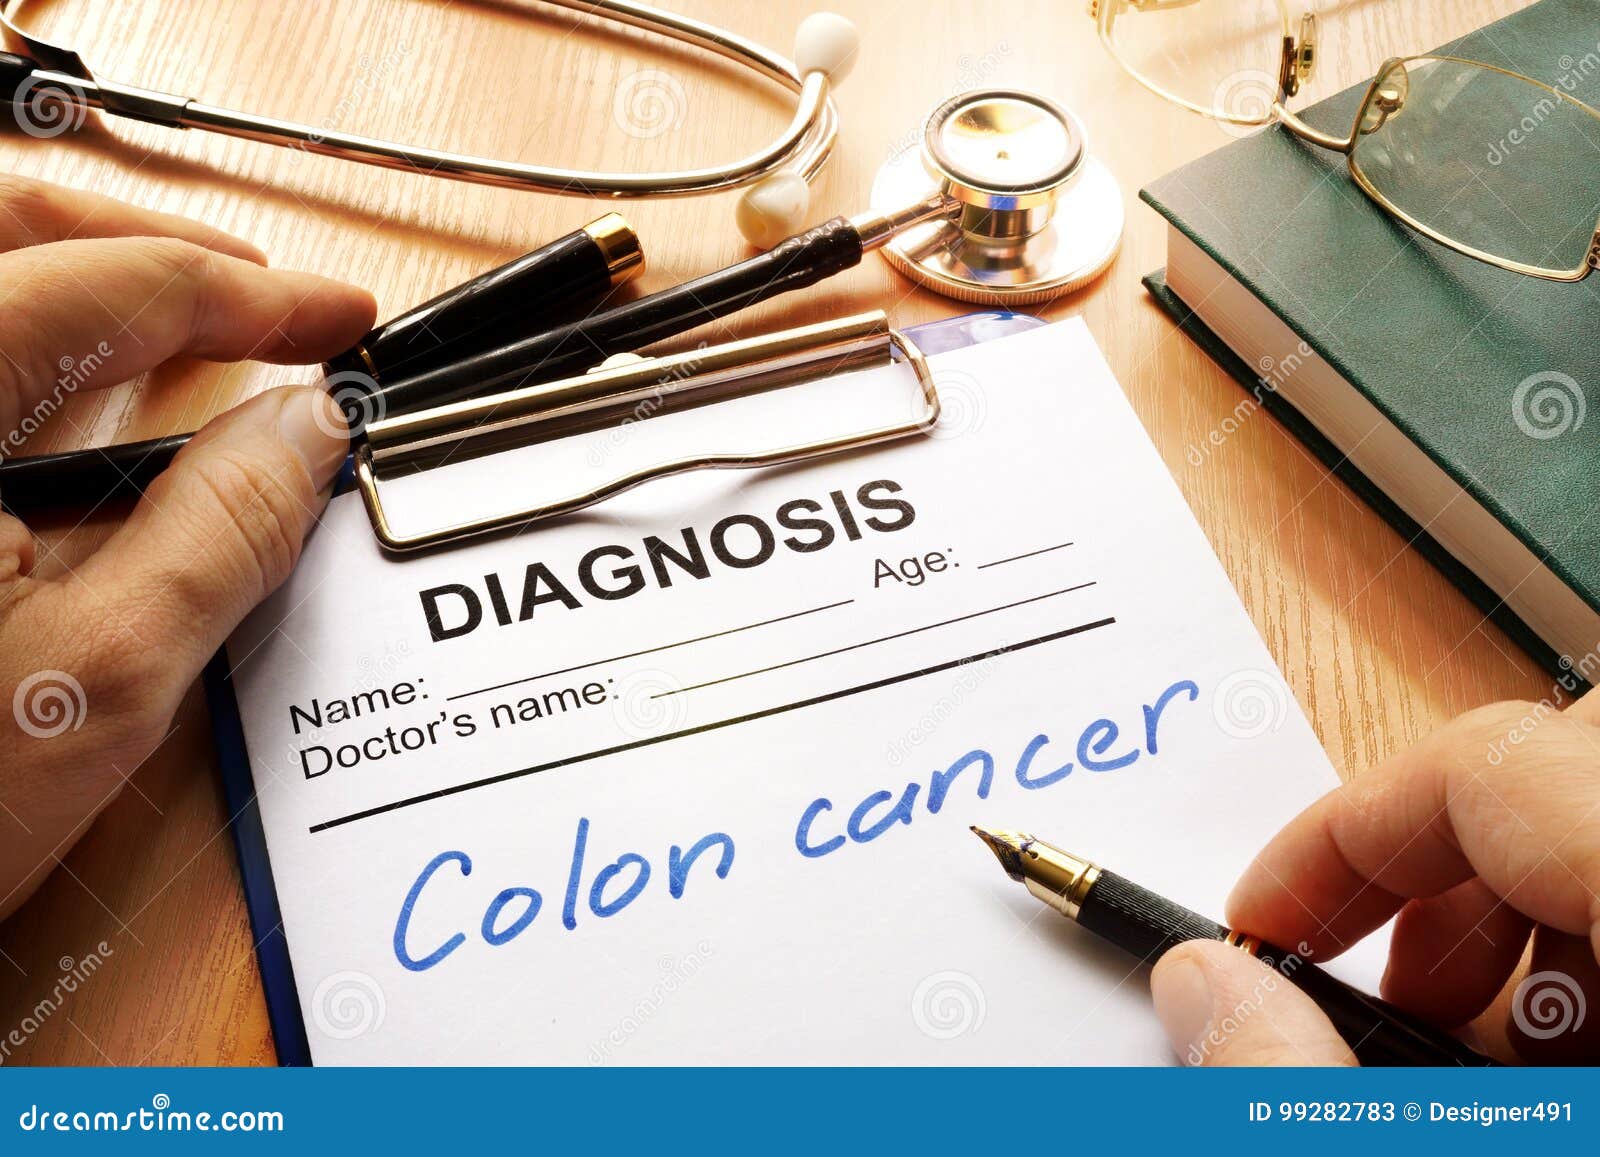 a diagnostic form with colon cancer.